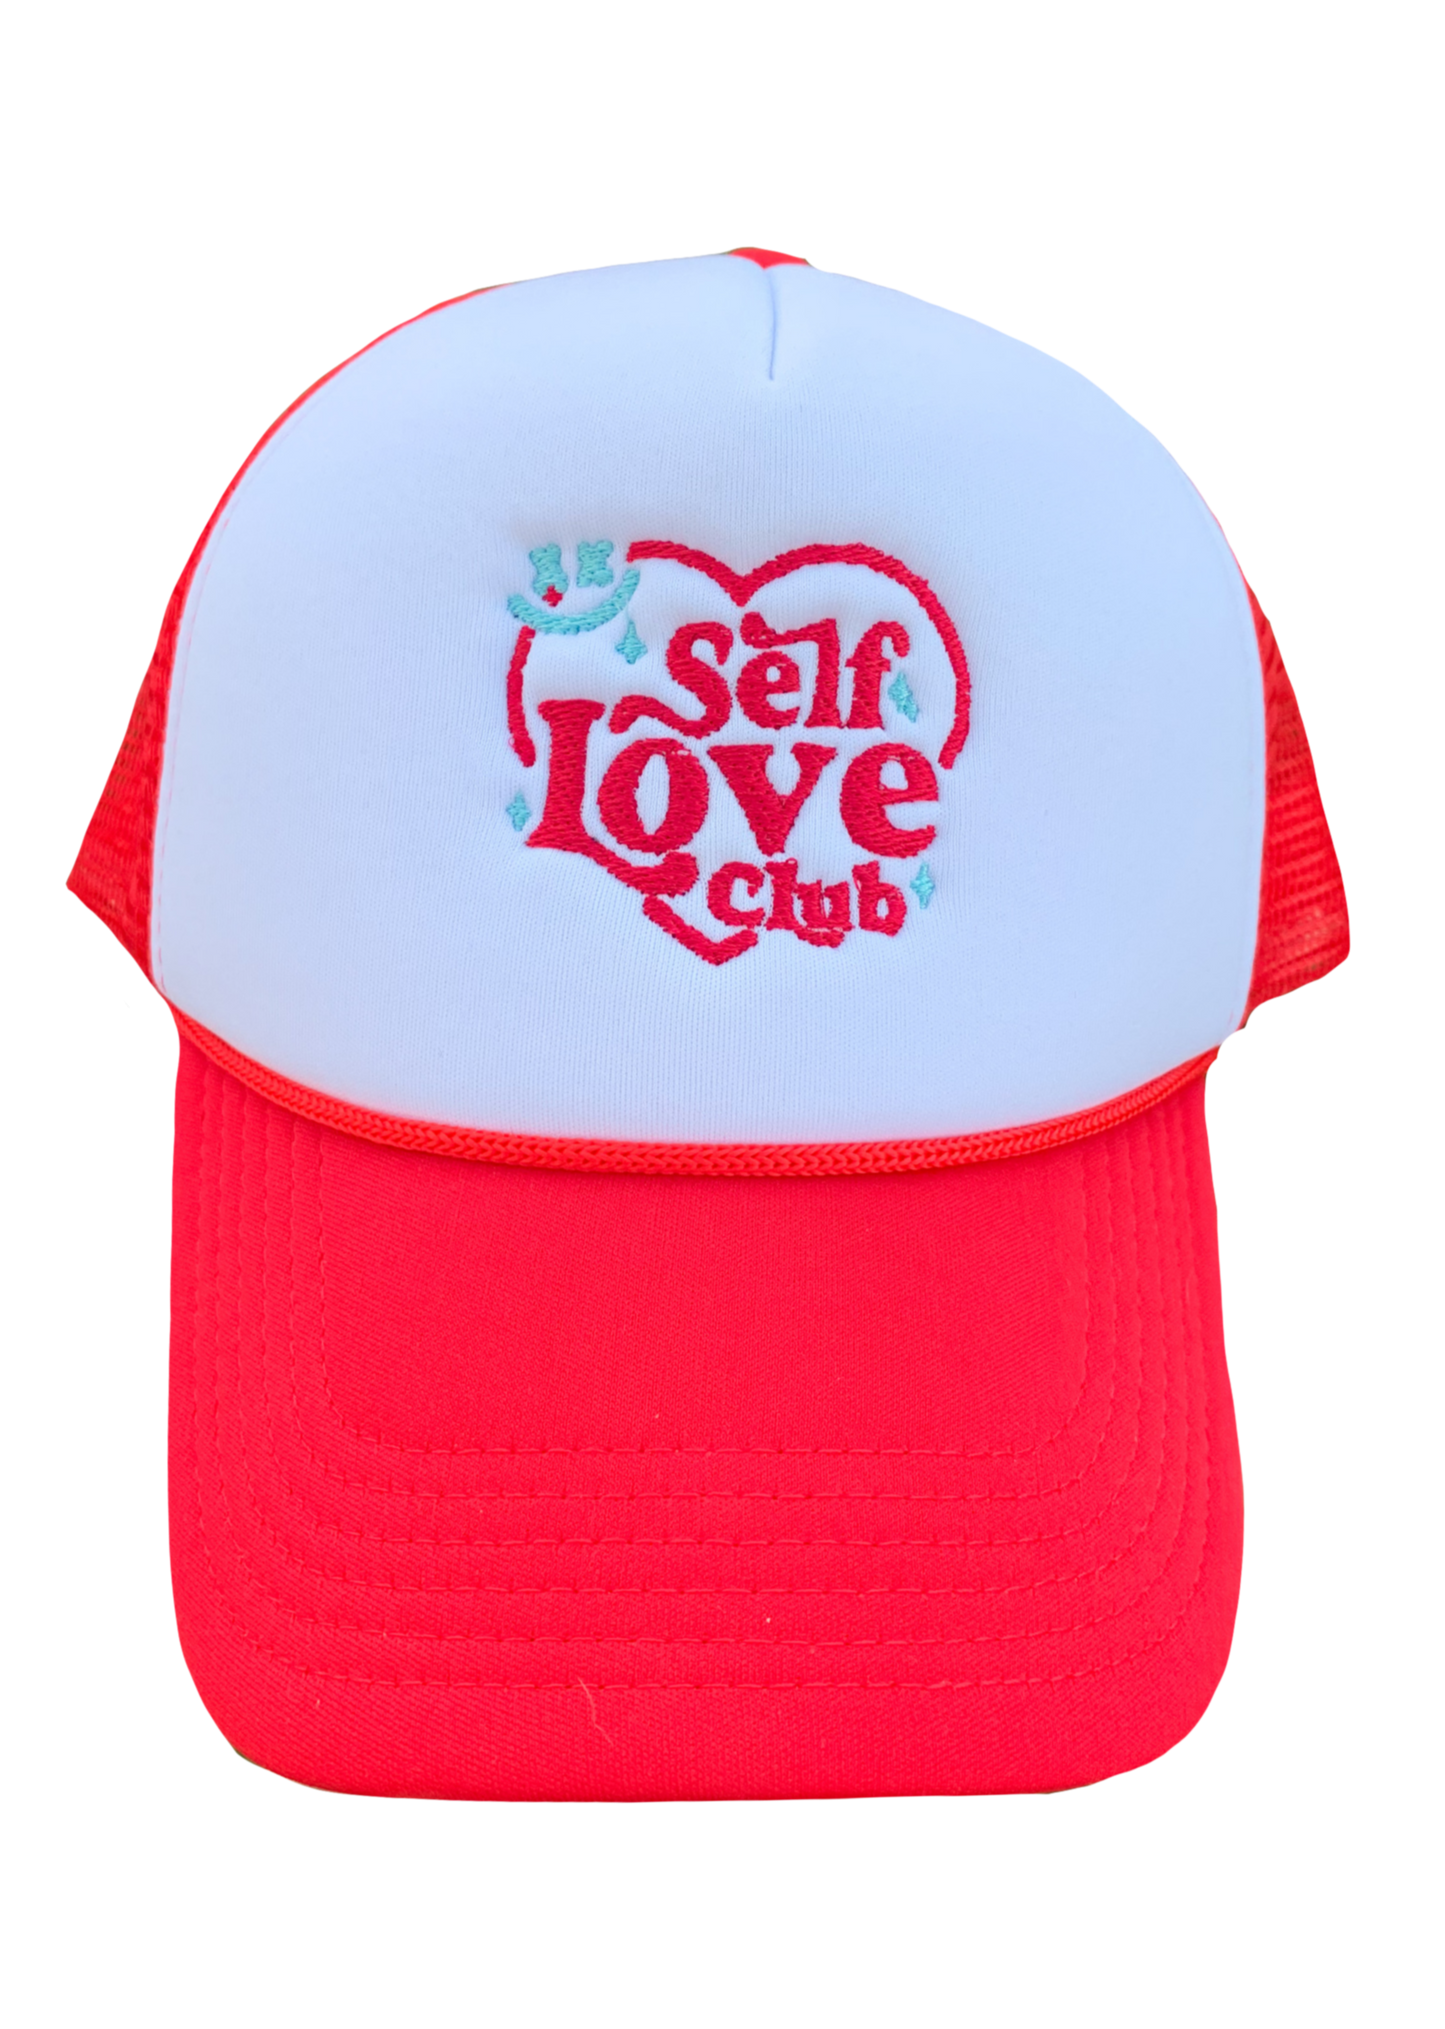 Self Love Club Embroidered Foam Trucker Hat